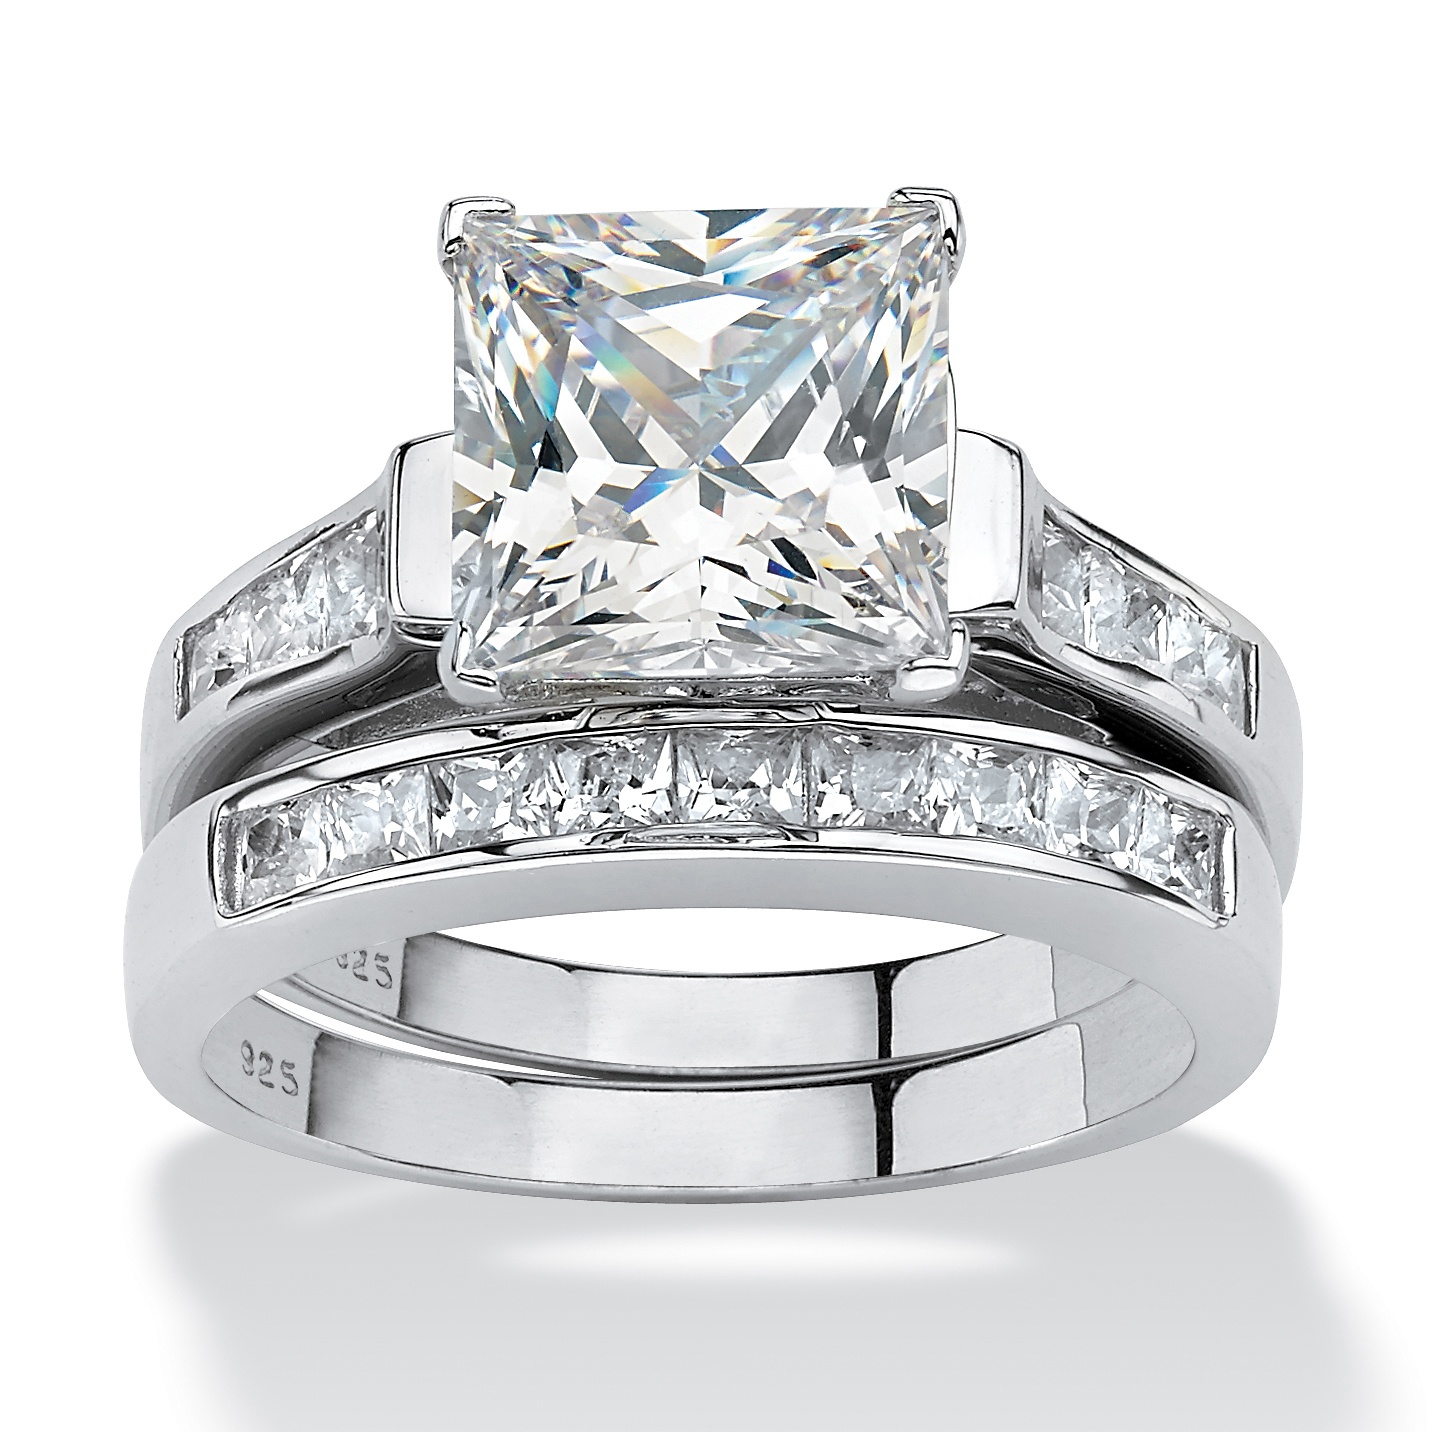 Bellystar Women Aaa 3Ct Princess CZ Diamant Wedding 925 Sterling Silver Jewelry Bridal Jewelry Ring